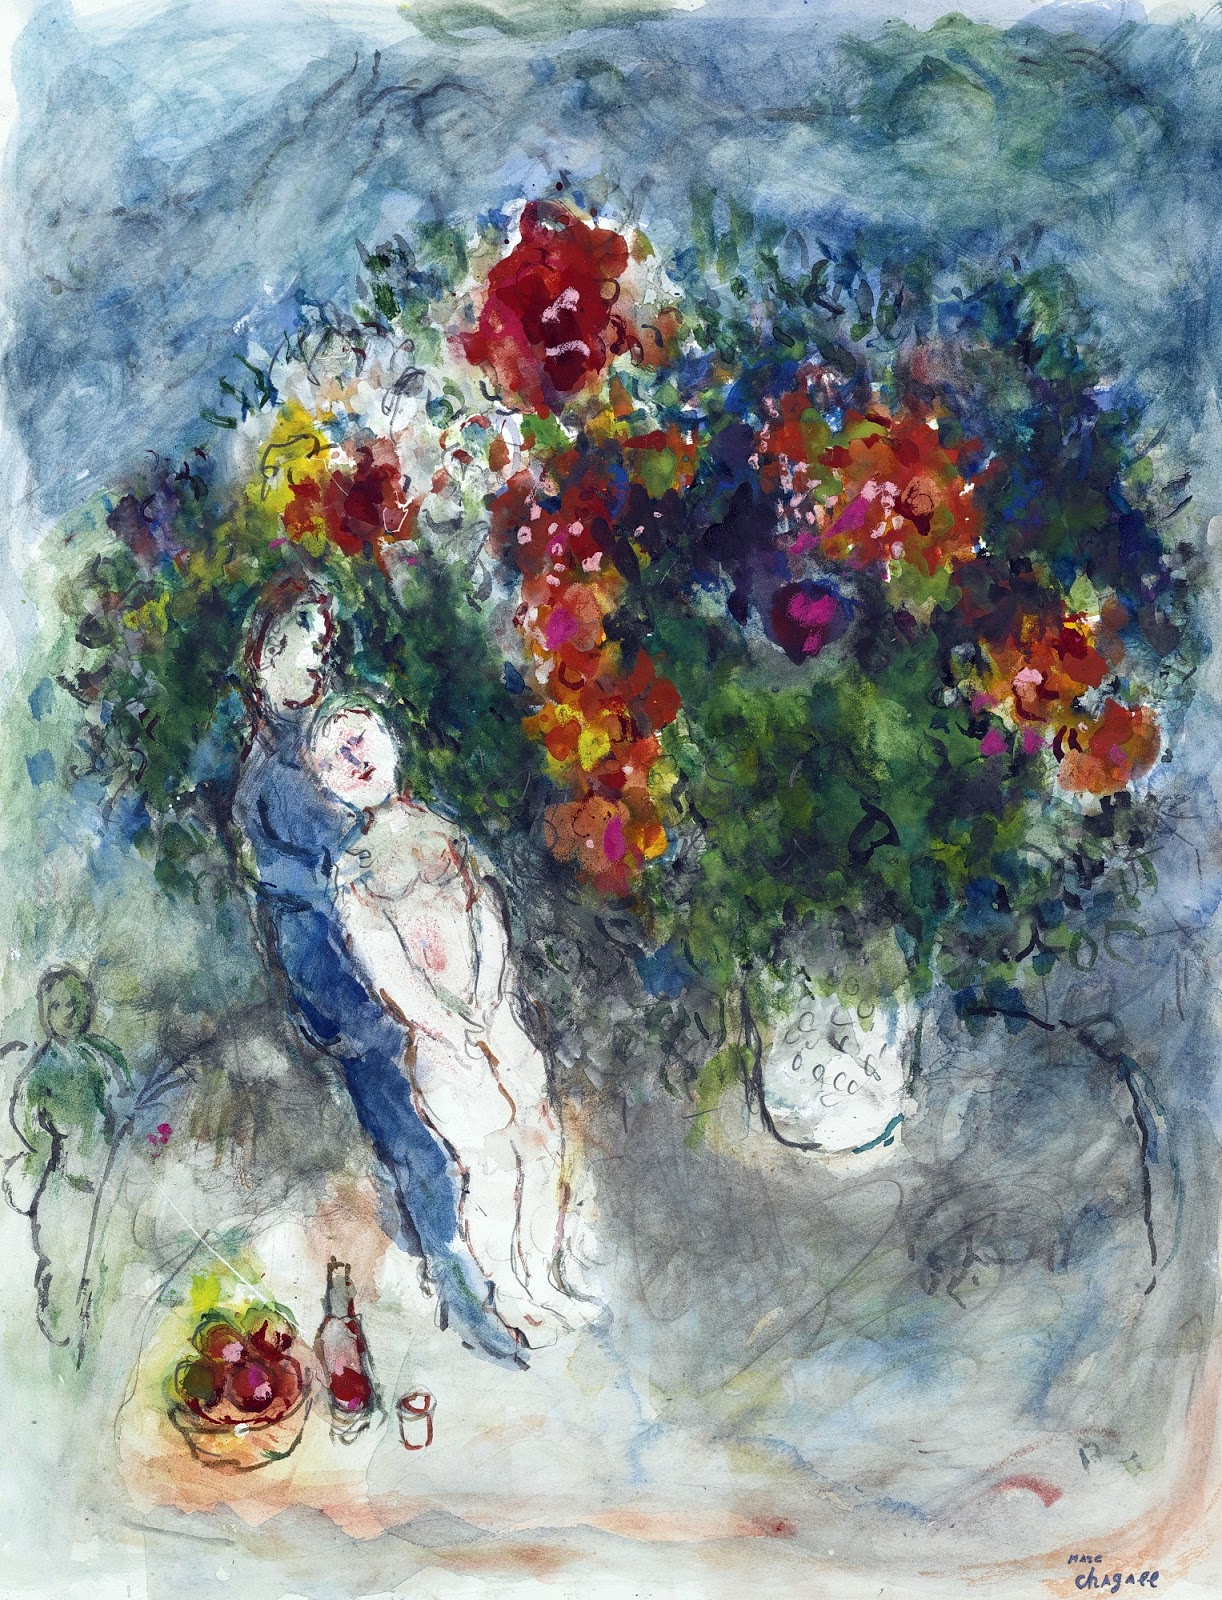 Marc+Chagall-1887-1985 (273).jpg